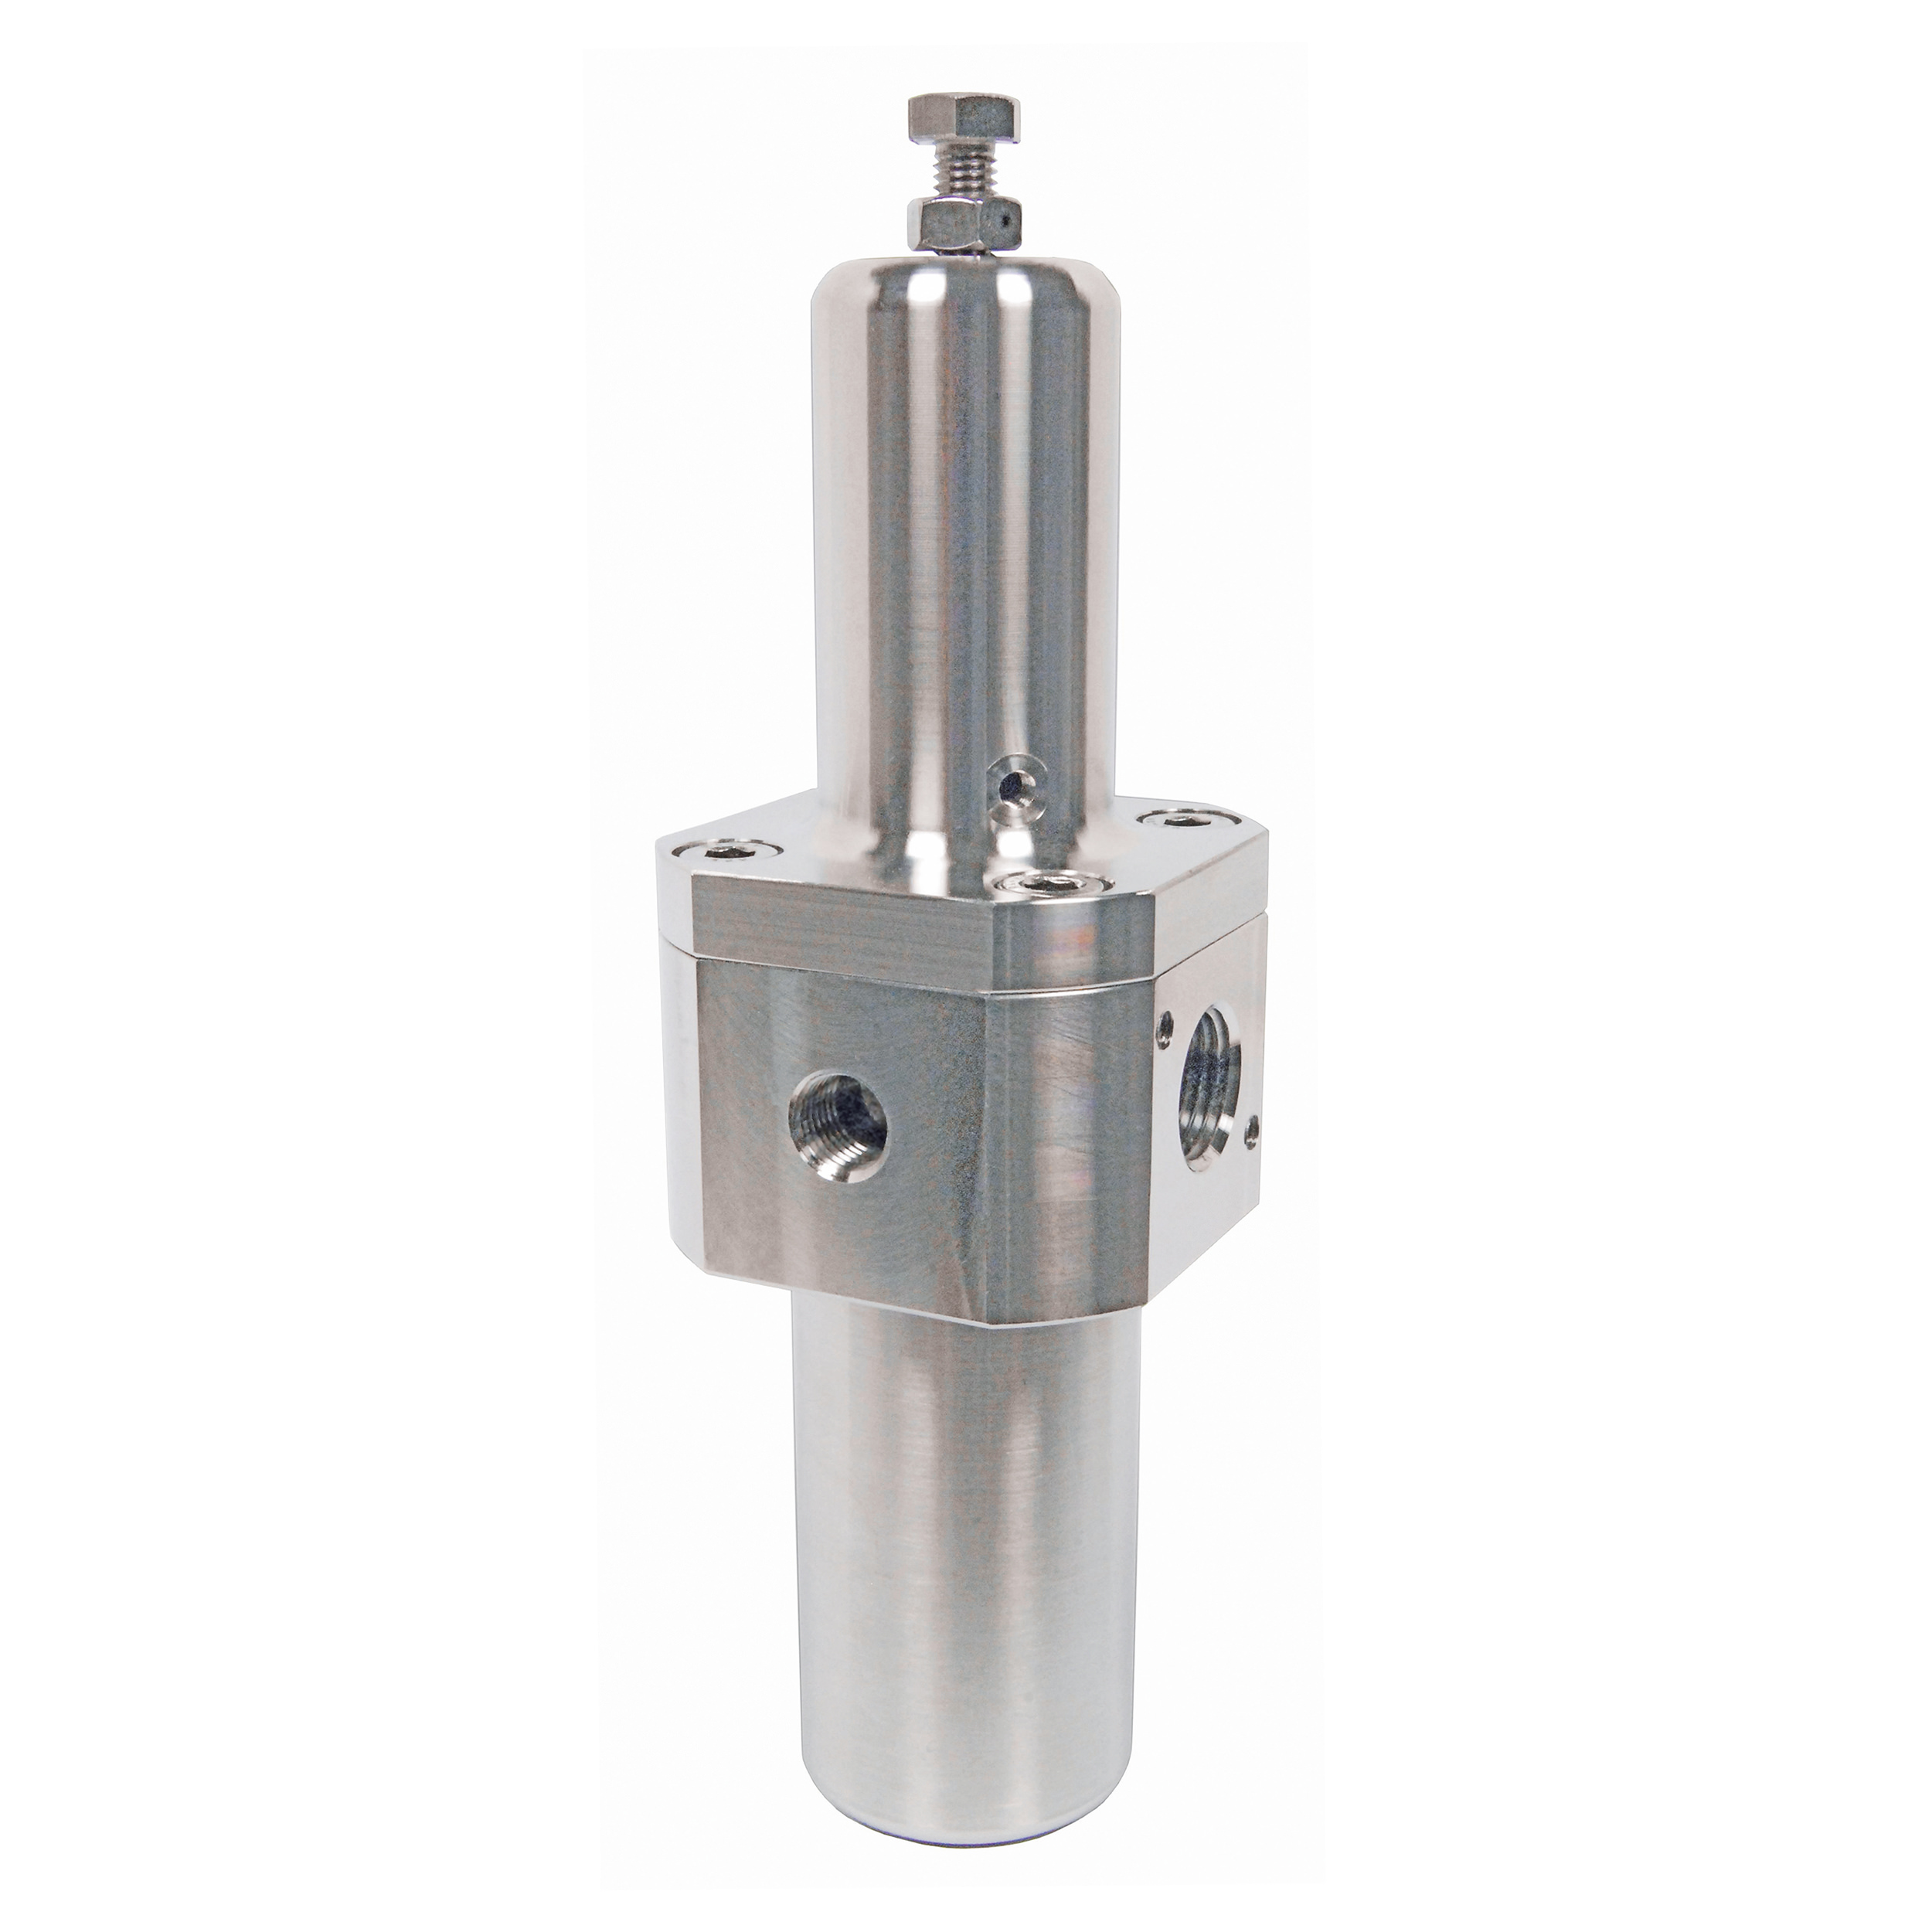 Filterdruckregler Typ 690 Edelstahl, ohne Manometer, BG 30, G⅜, 0,2–3 bar, Handablassventil am Behälter, QN: 3.000 Nl/min